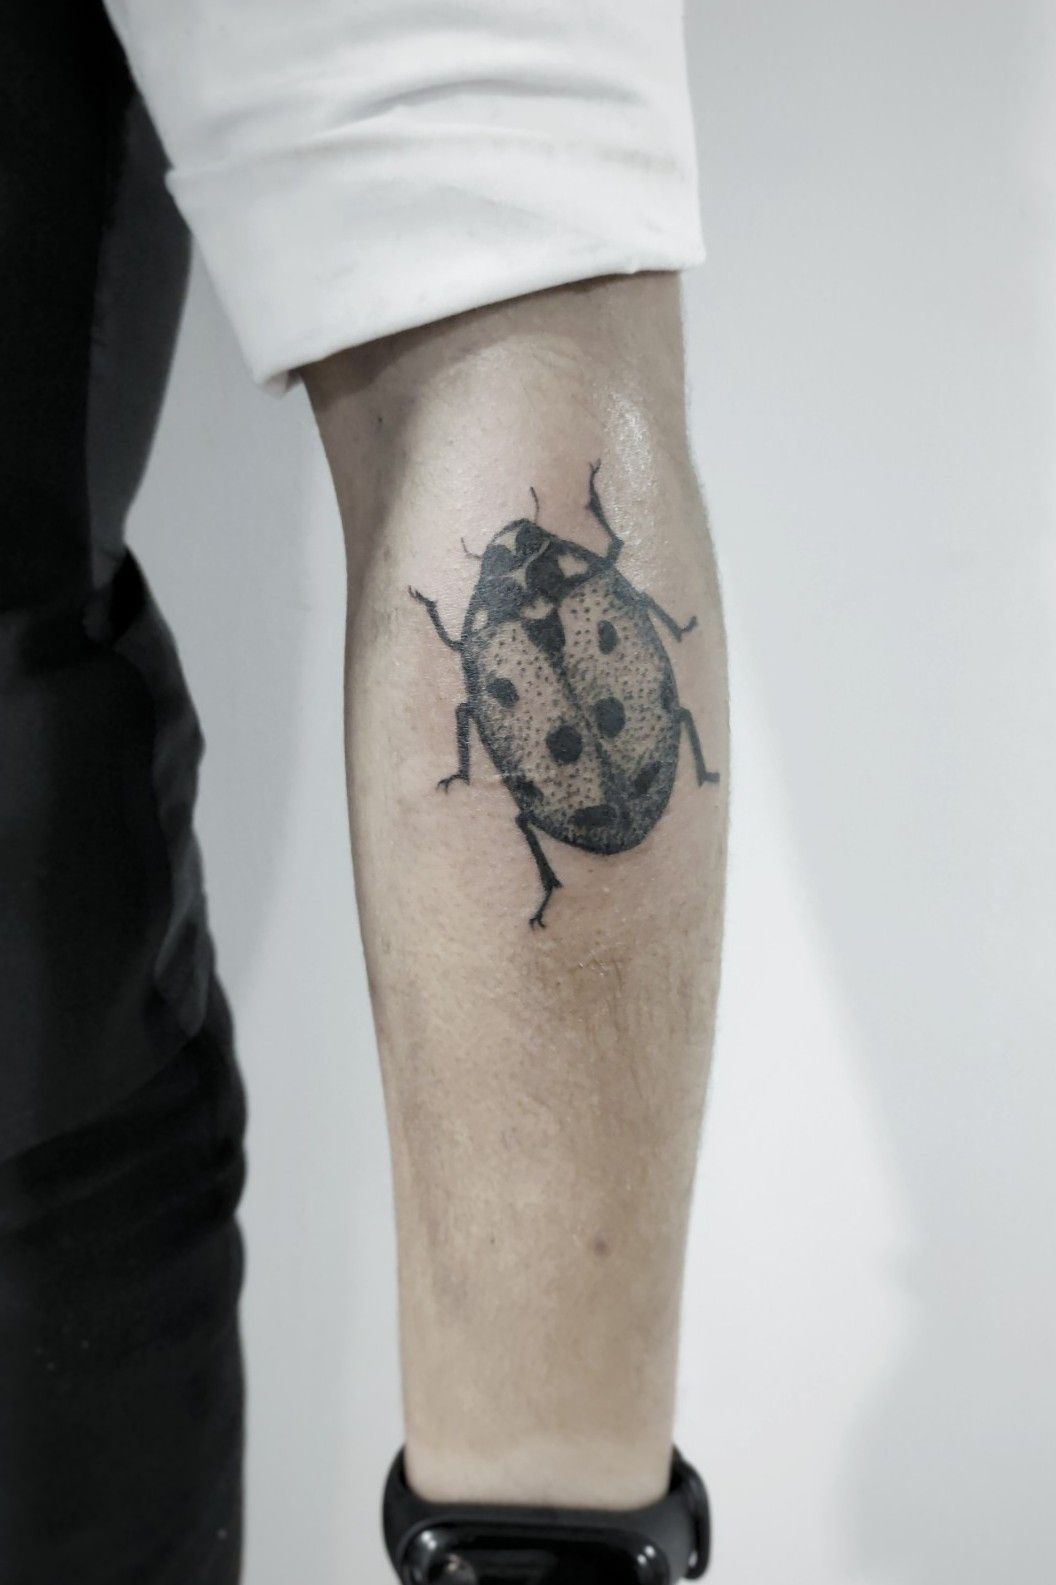 My Miraculous Ladybug tattoo in progress 🐞 | Miraculous Amino